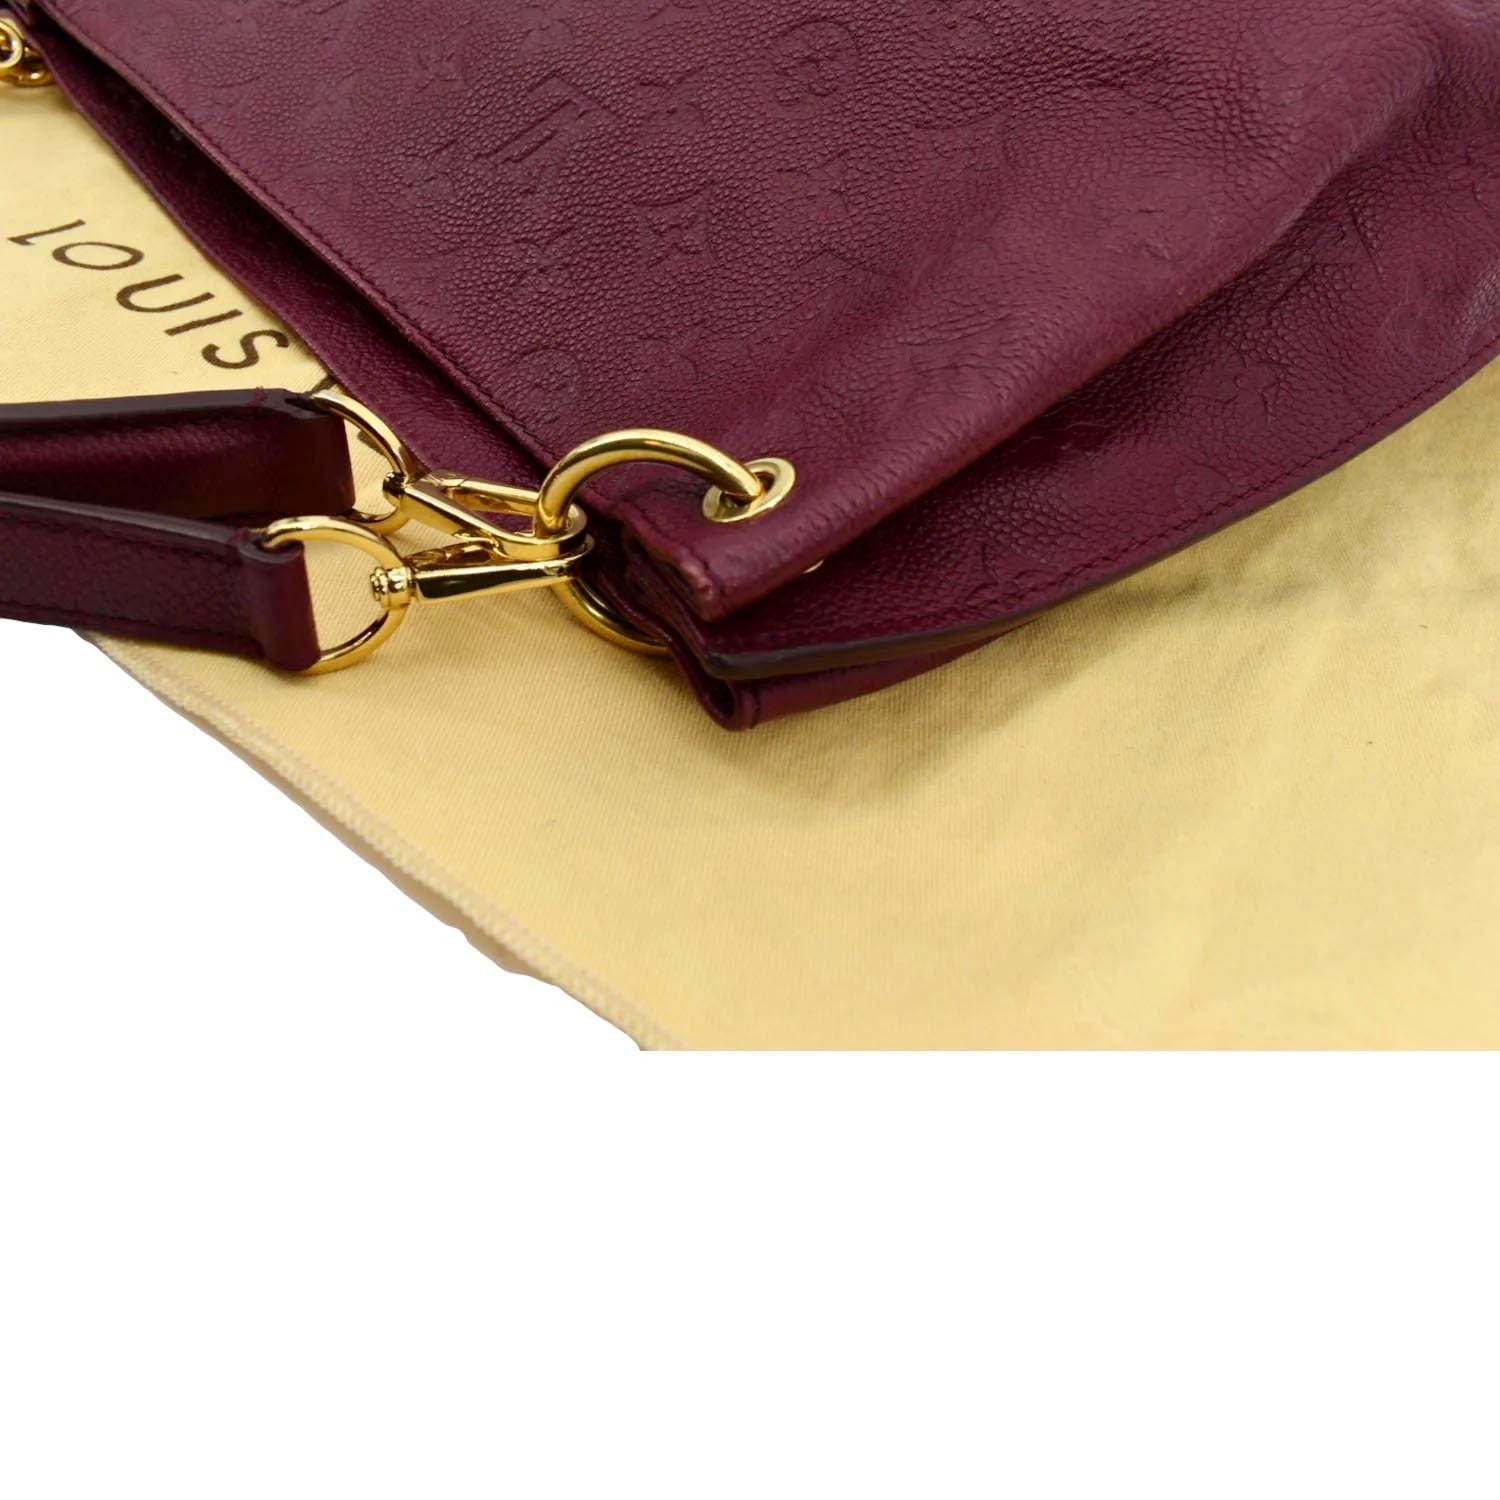 Authentic Louis Vuitton Empreinte Metis 2 Way in Red Hobo Shoulder Handbag